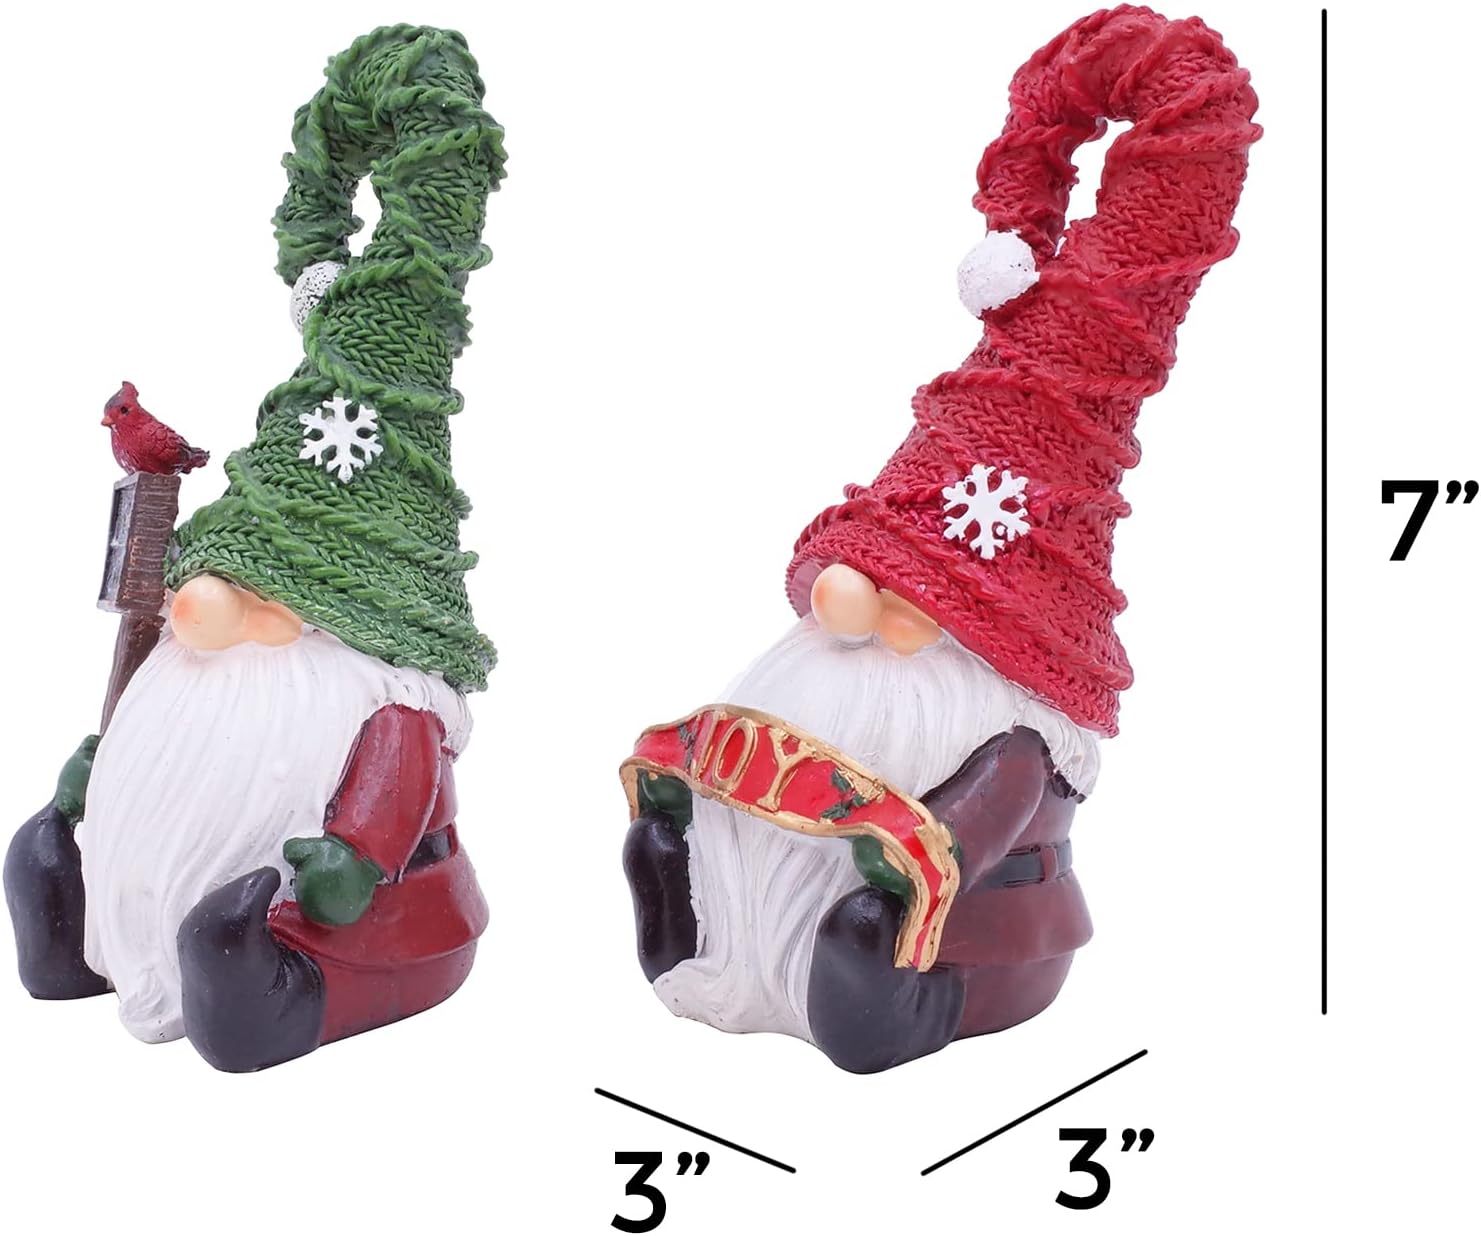 Set of 2 Christmas Garden Gnomes Outdoor Decor, 7 inch Polyresin Gnome Figurines Statue Sculptures